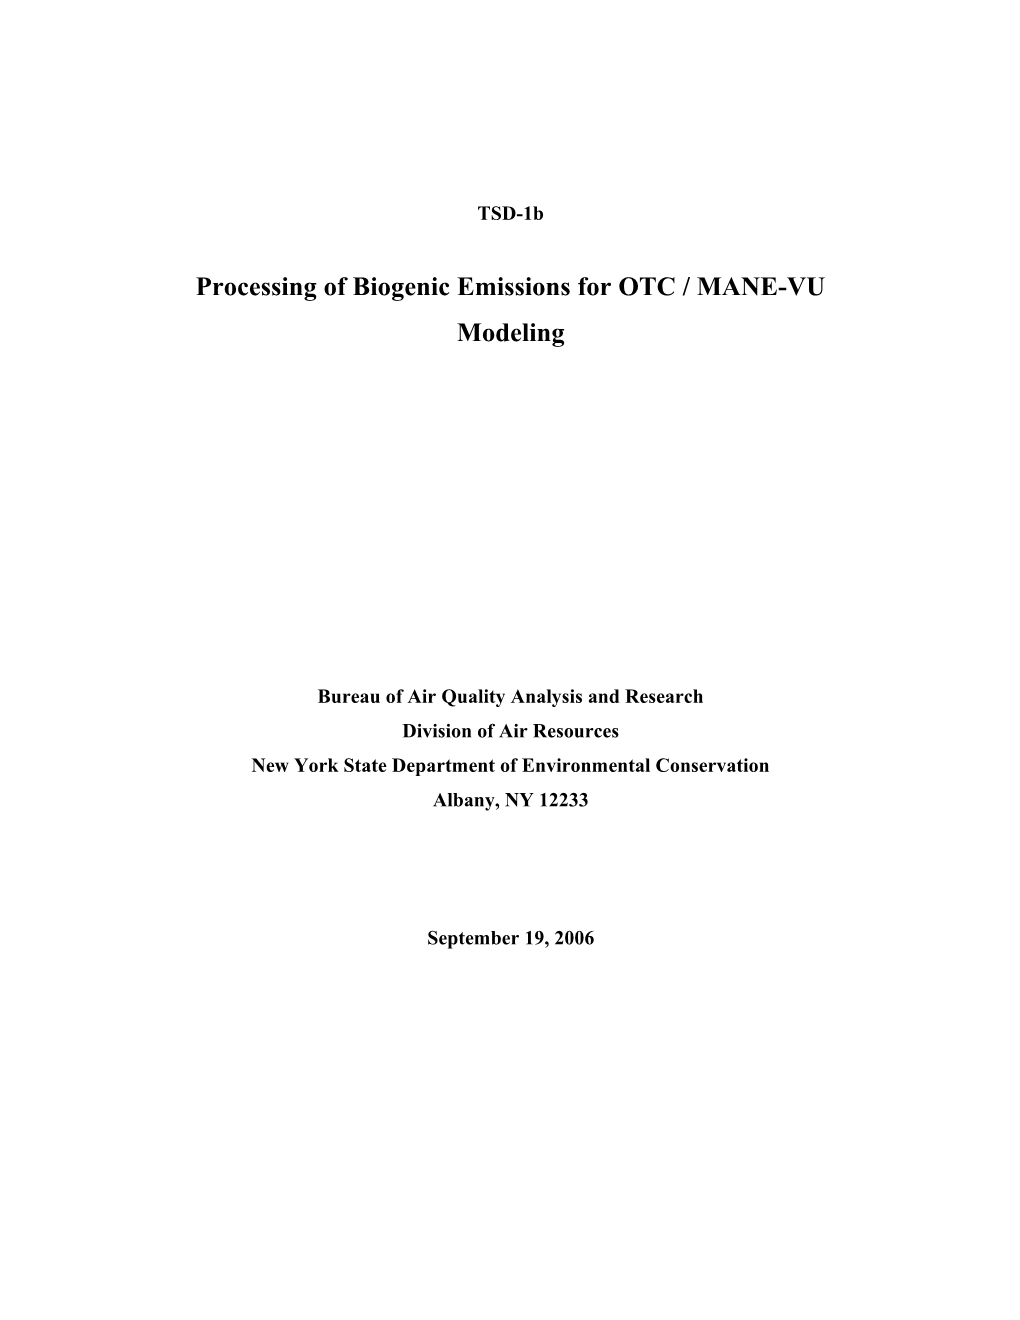 Brief Summary of Biogenic Emission Processing for MANE-VU / OTC Modeling